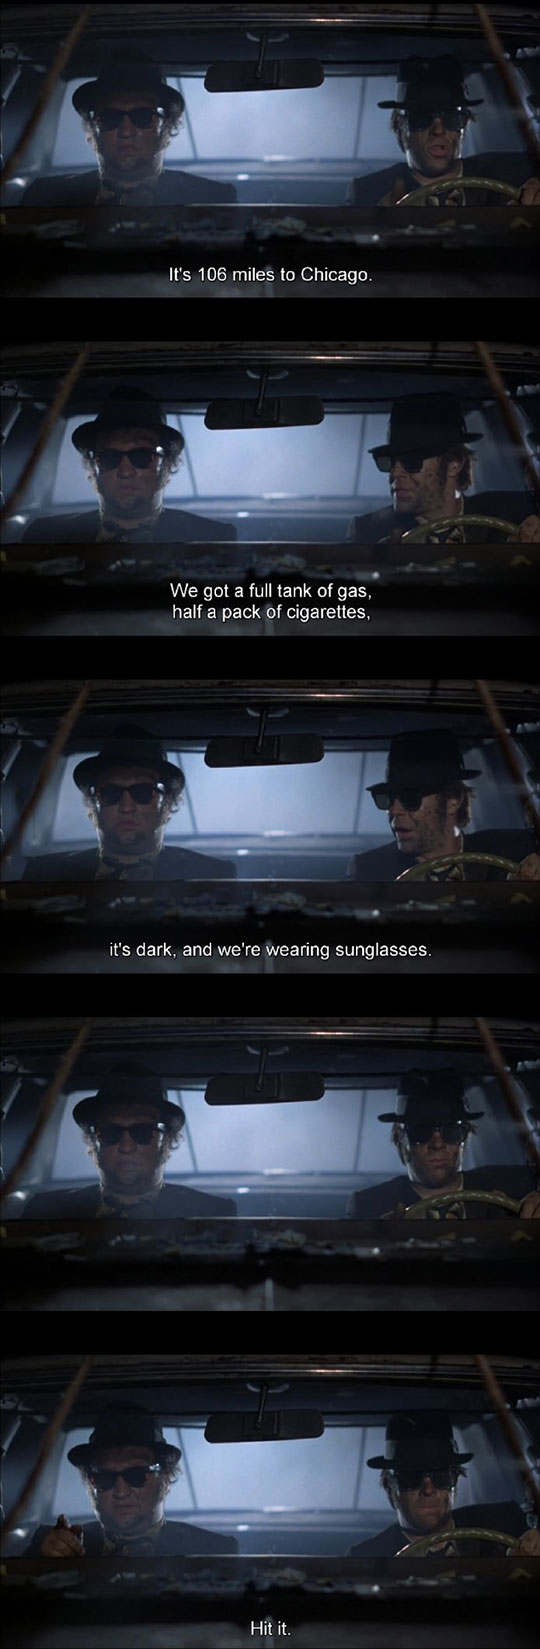 ...it's dark, and we're wearing sunglasses.